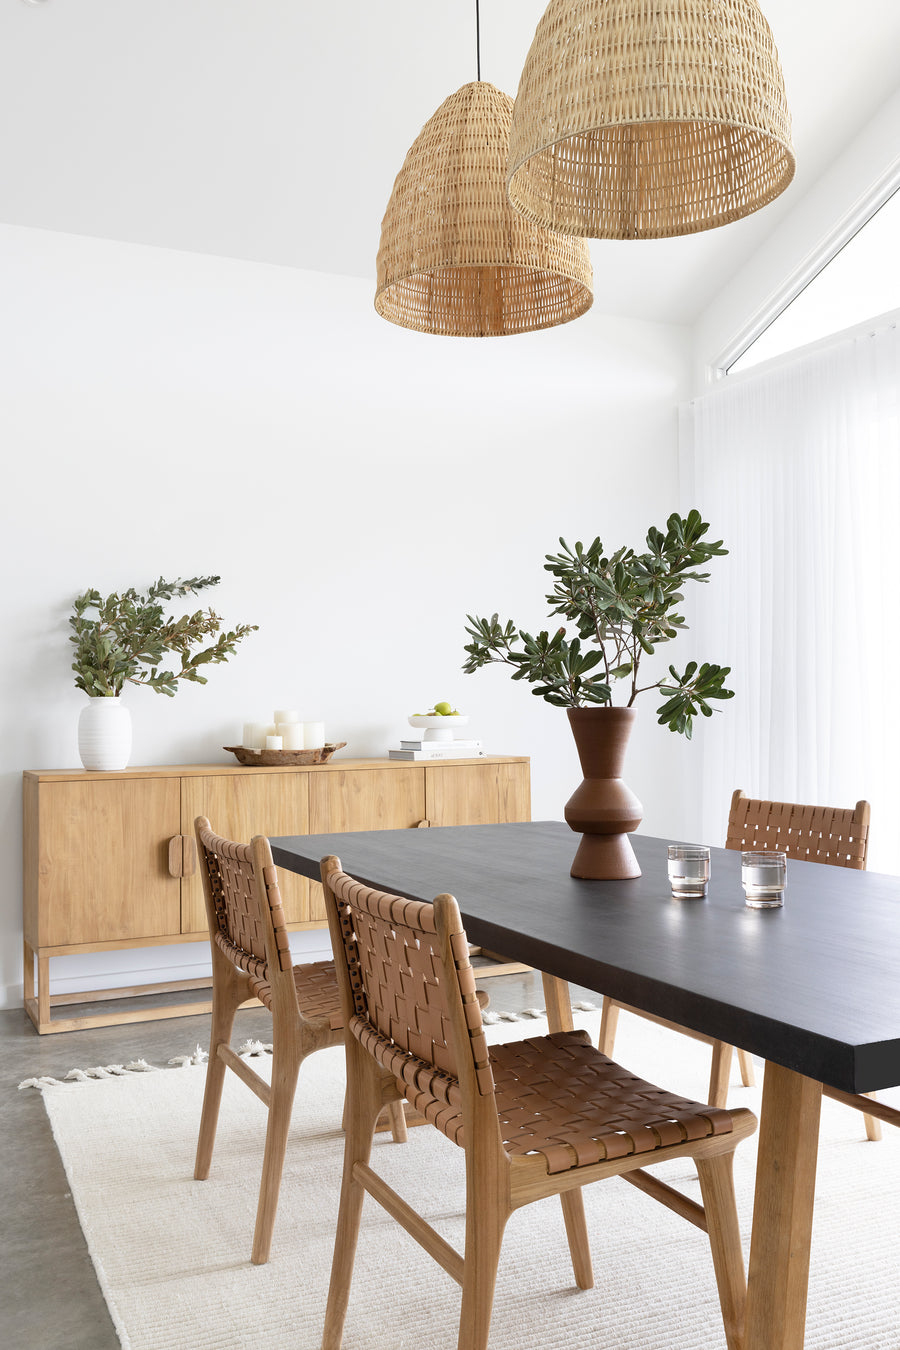 2.4m Sierra Rectangular Dining Table | Ebony Black with Light Honey Acacia Wood Legs - www.elkstone.com.au